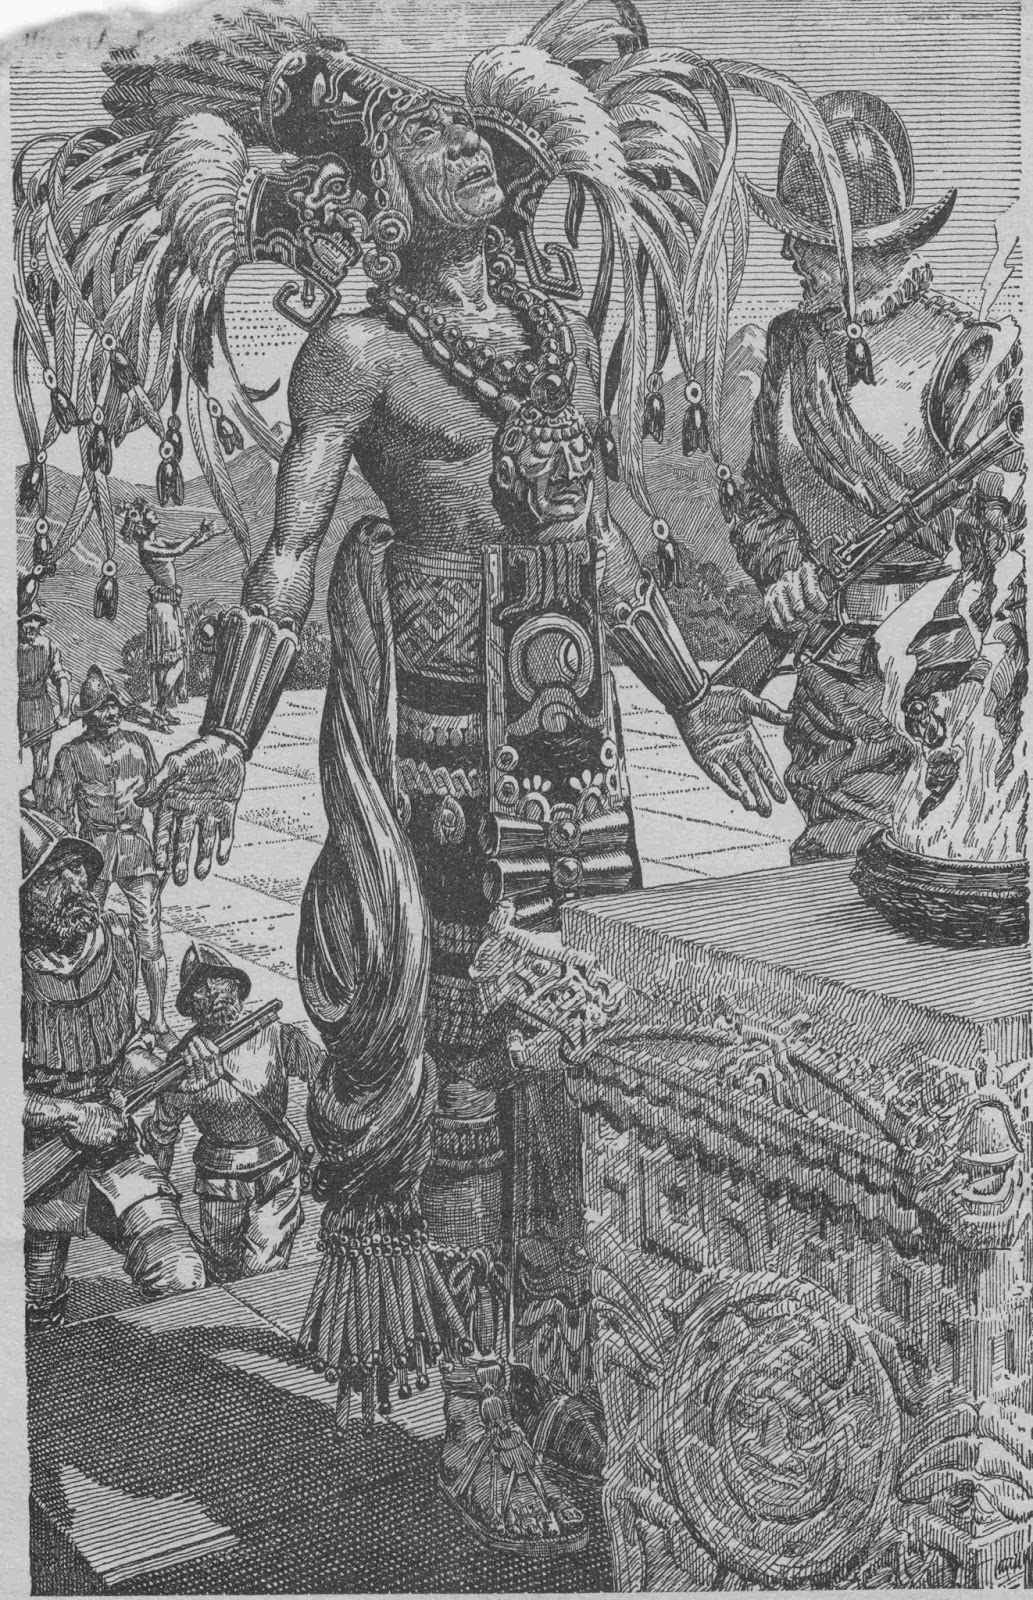 Illustration of Mayan priest in Adventure magazine